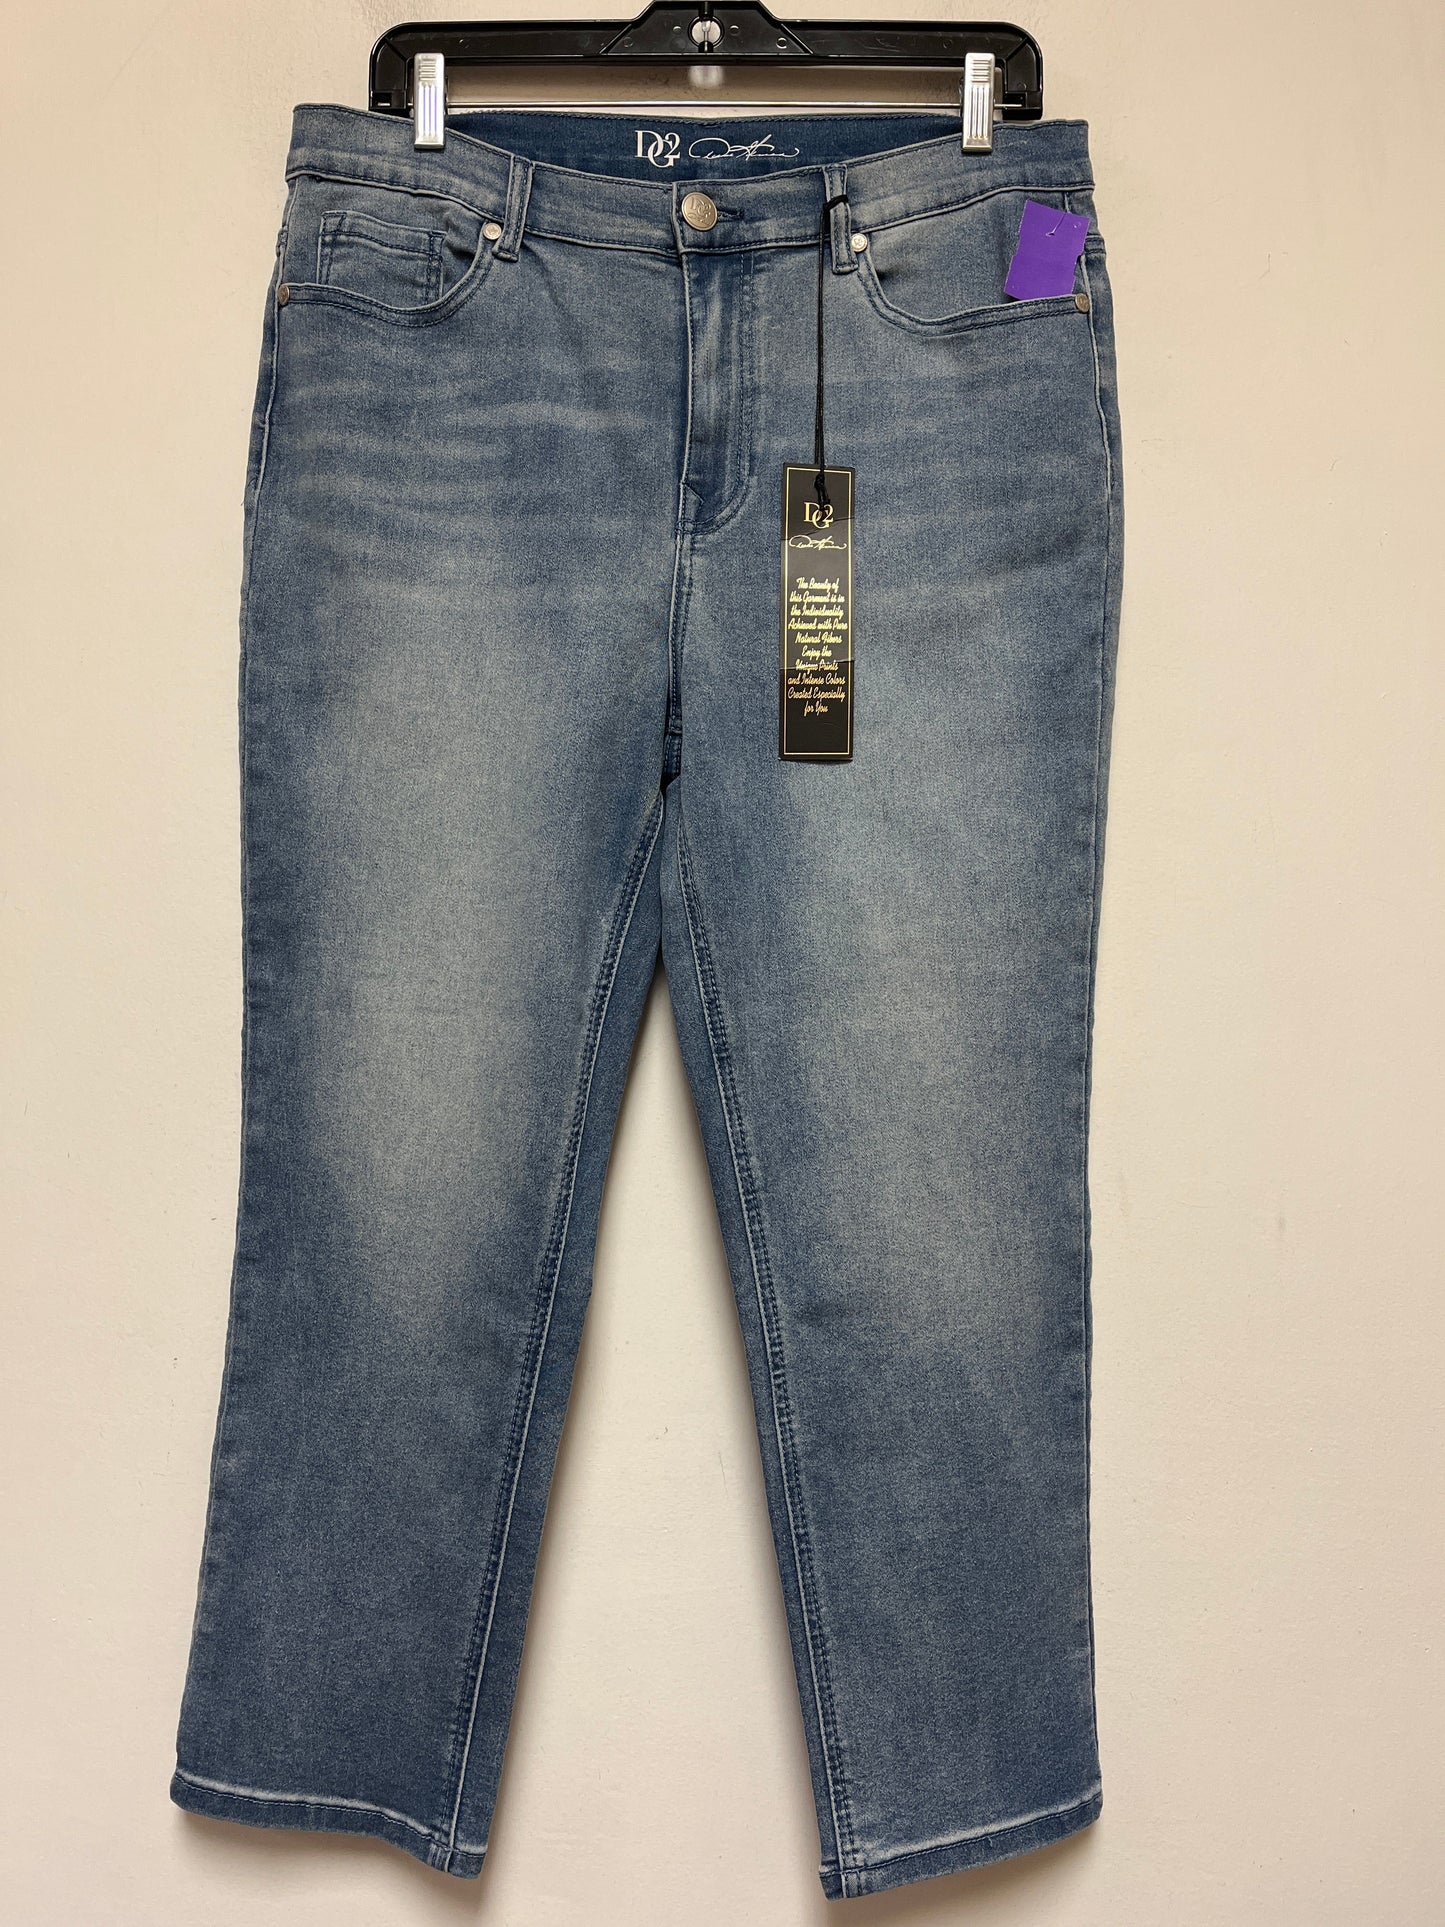 Blue Denim Jeans Straight Diane Gilman, Size 12